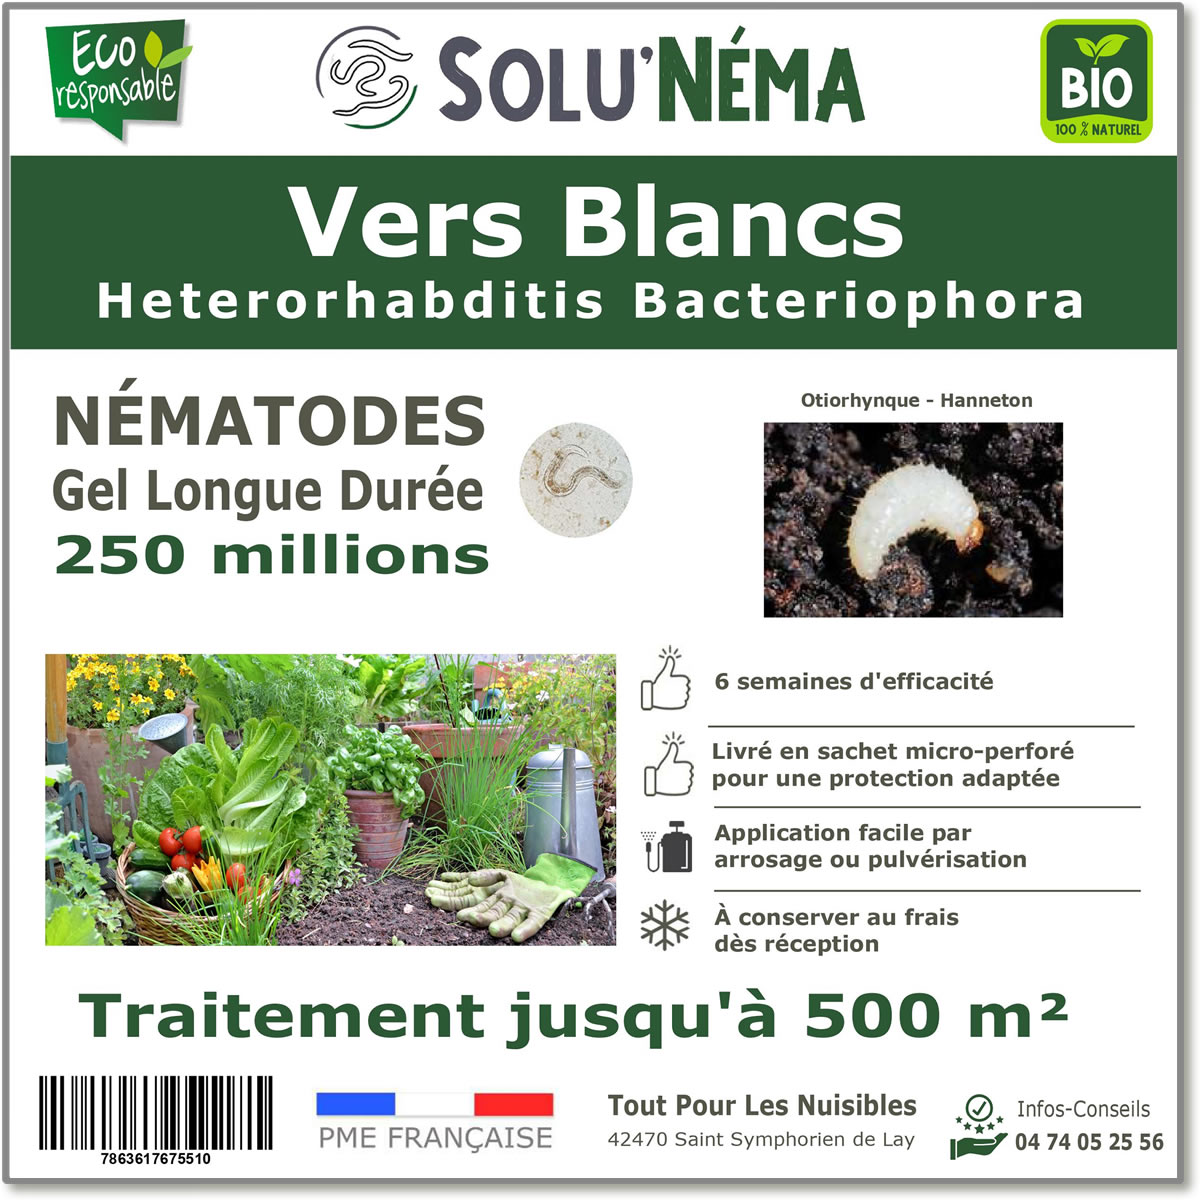 Nematodes (HB) Solunema για λευκές γρίλιες - κληματόβεργος - κοκοροειδές 250 εκατομμύρια SF